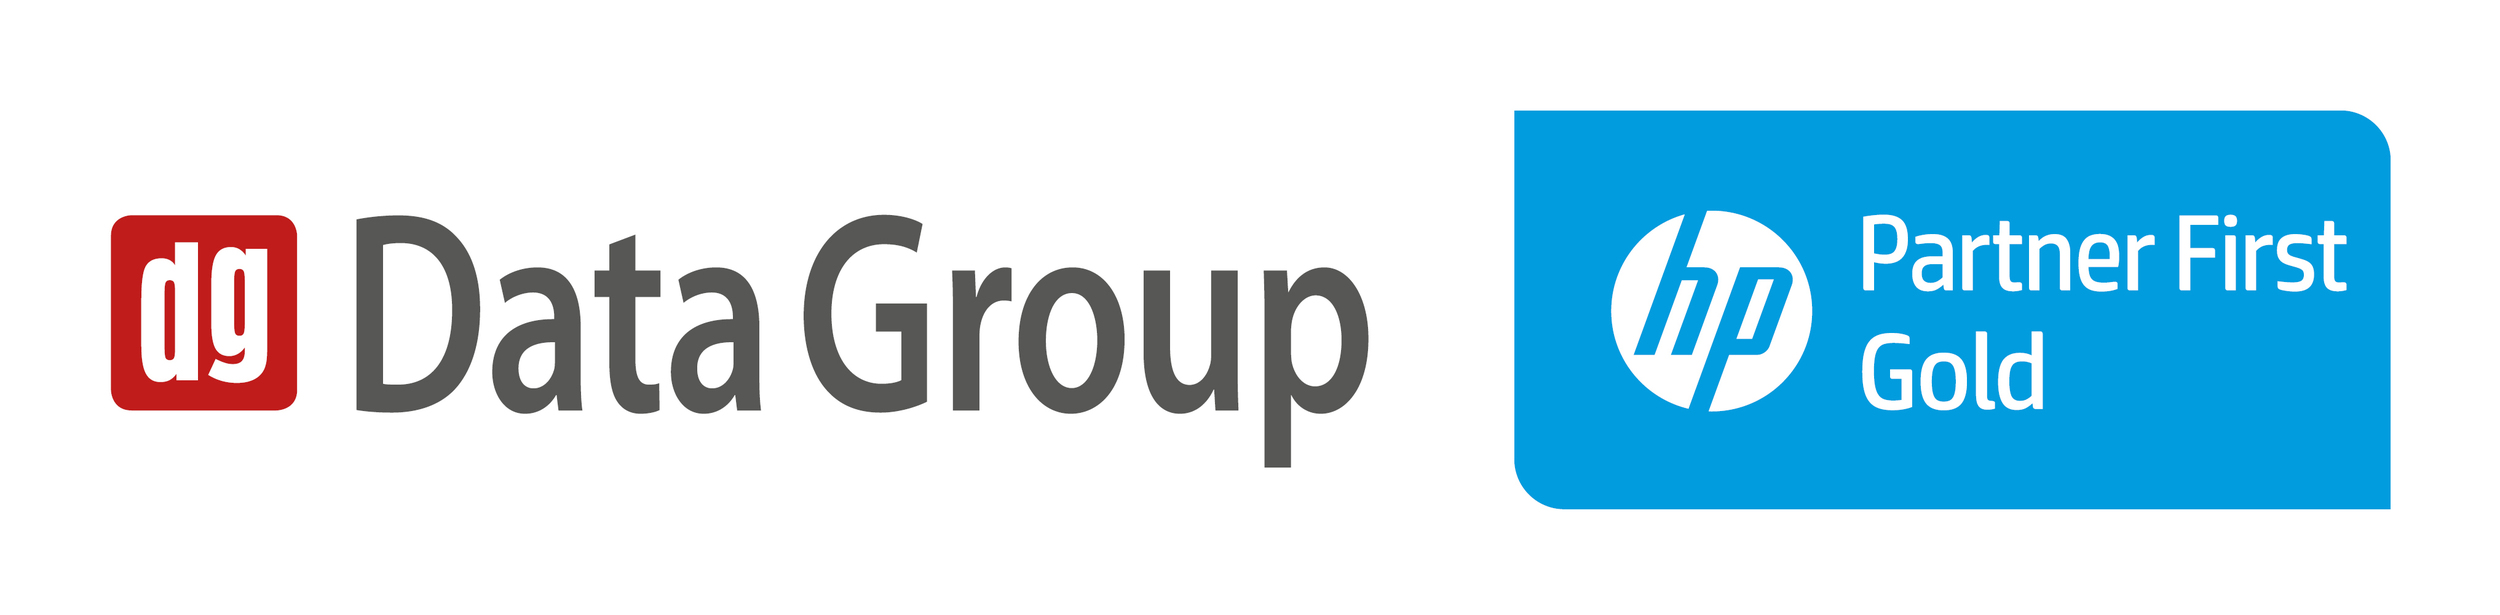 Data Group HP Partner First Gold lockup.jpg